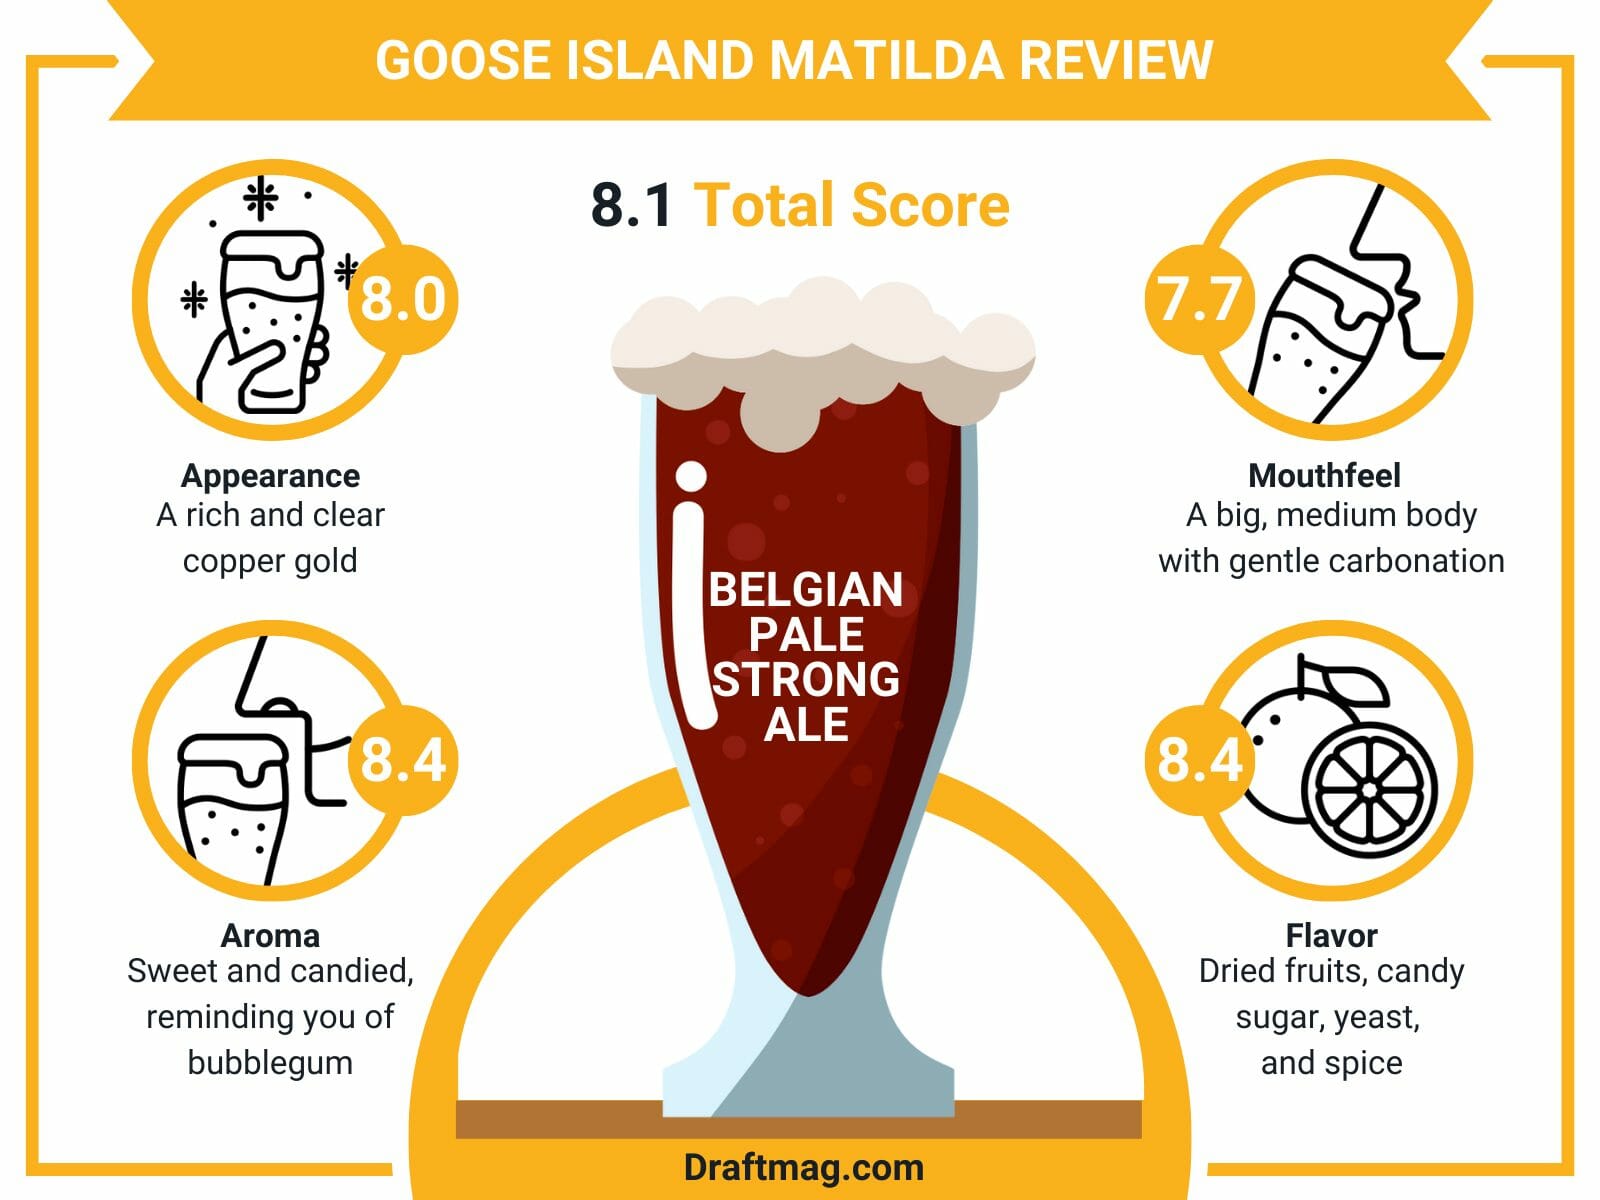 Goose island matilda review infographic